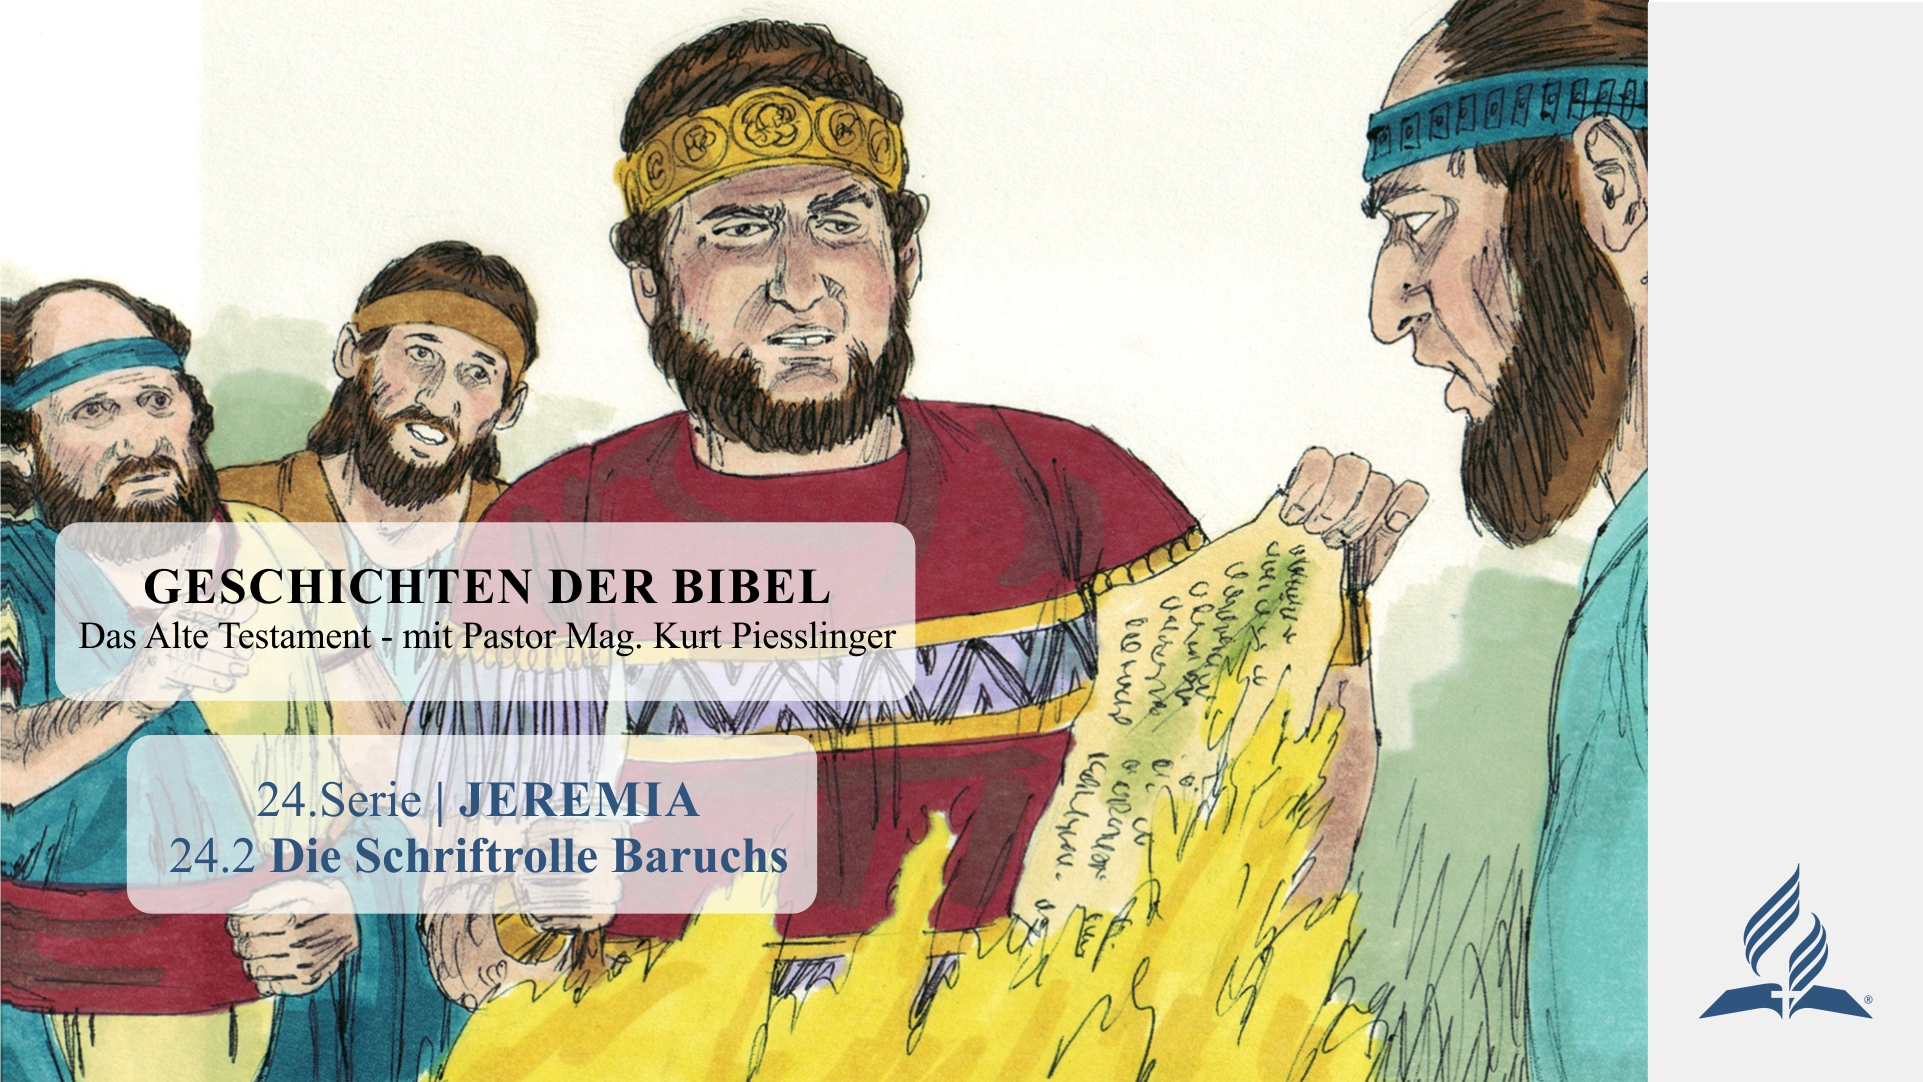 GESCHICHTEN DER BIBEL : 24.2 Die Schriftrolle Baruchs – 24.JEREMIA | Pastor Mag. Kurt Piesslinger